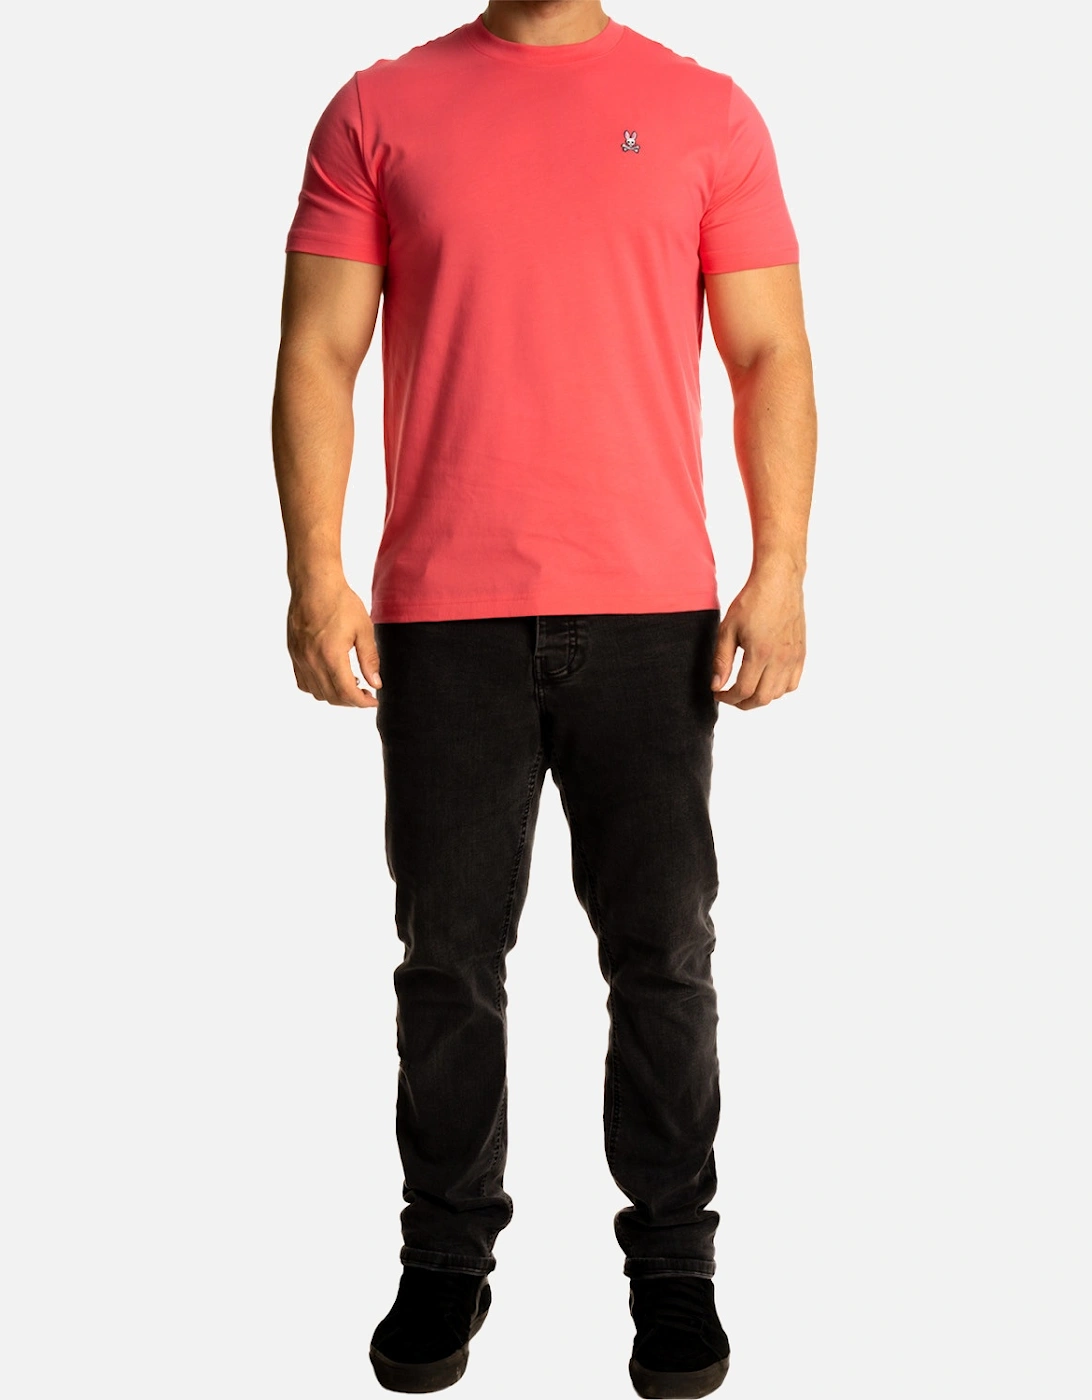 Mens Classic Crew T-Shirt (Pink)